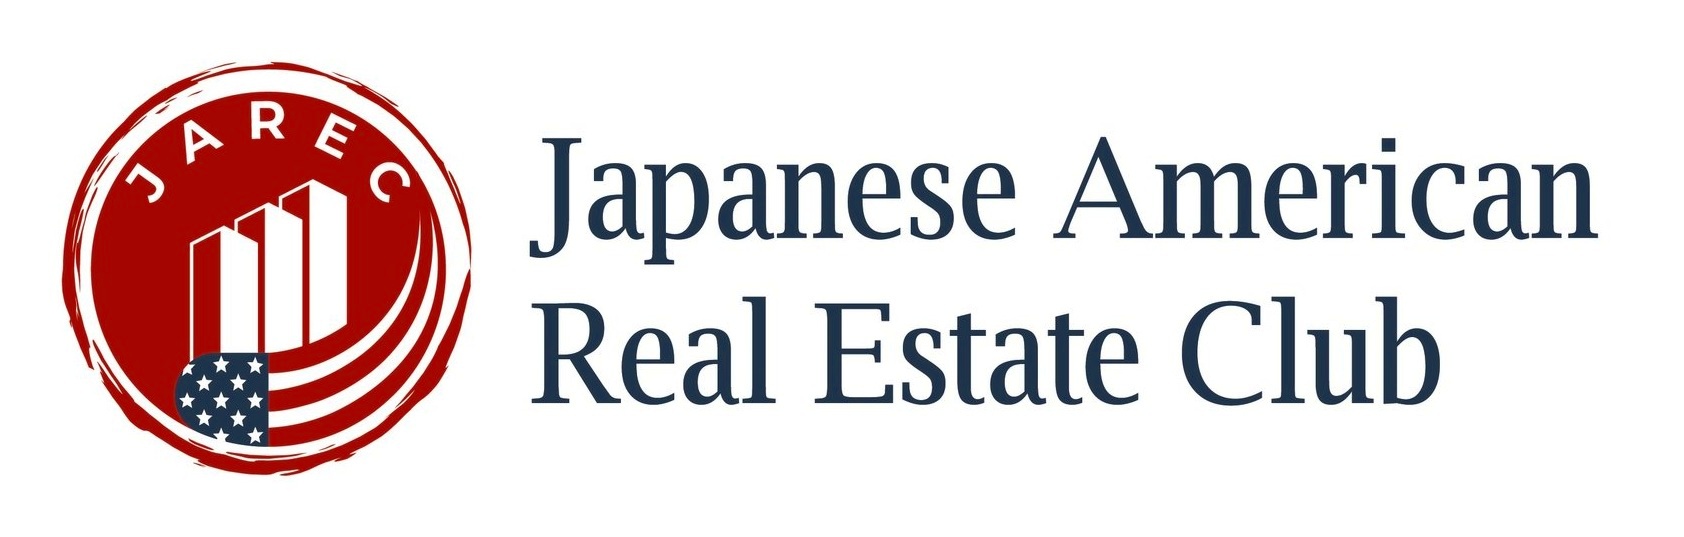 Japanese American Real Estate Club